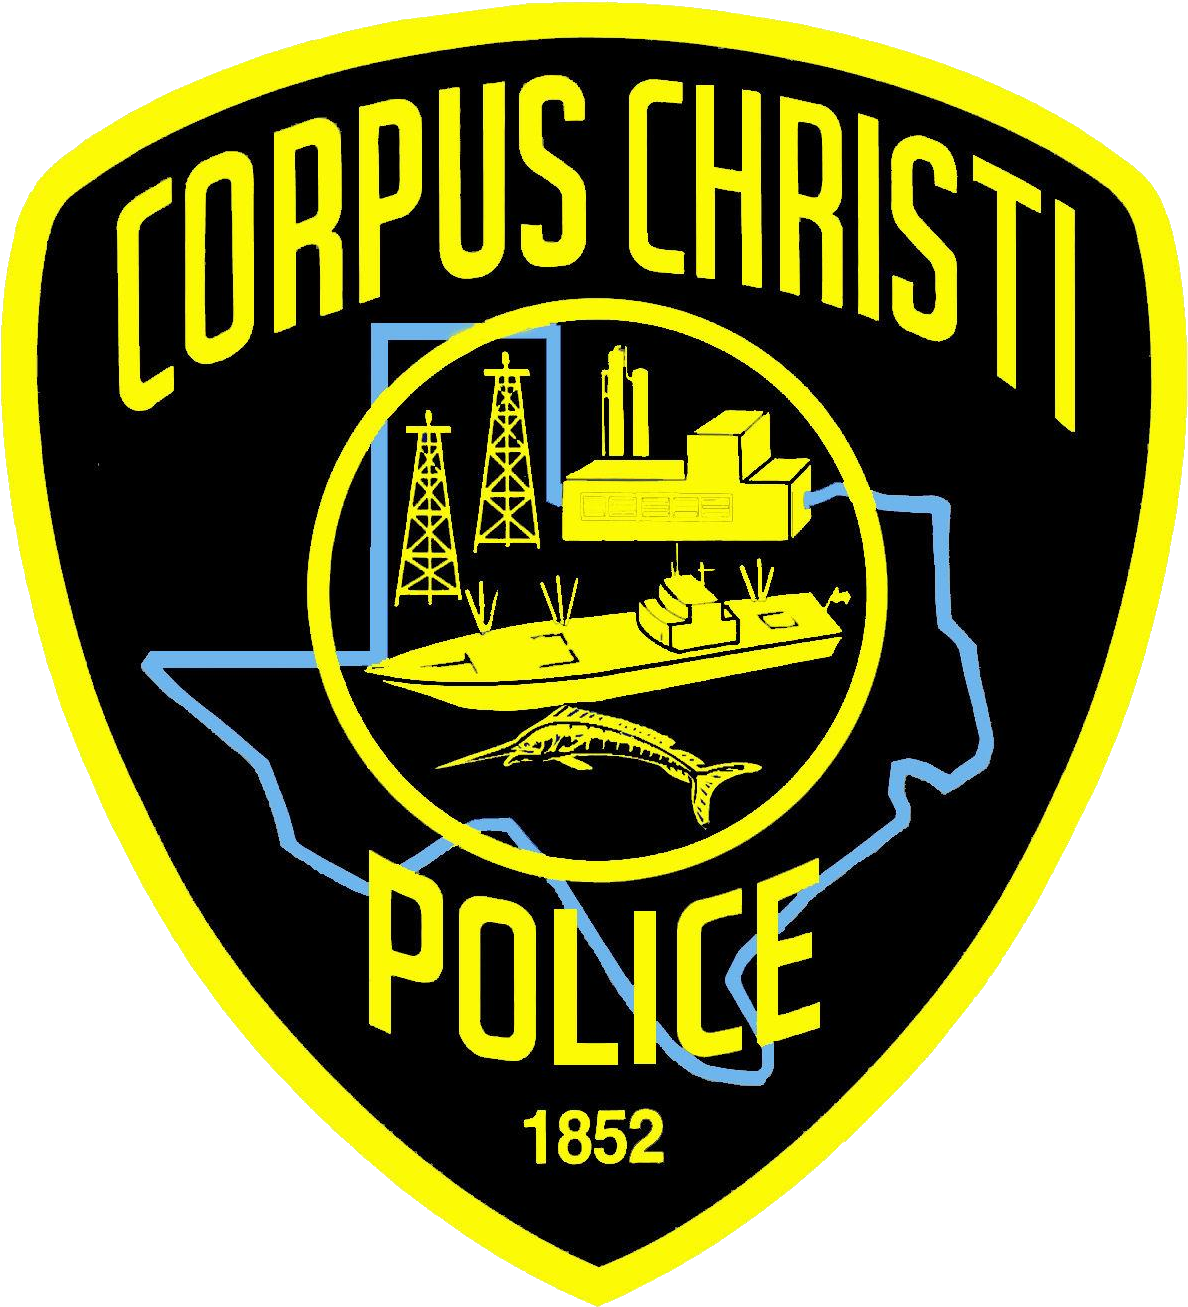 Corpus Christi Police Department - Corpus Christi Police Department (1190x1342)